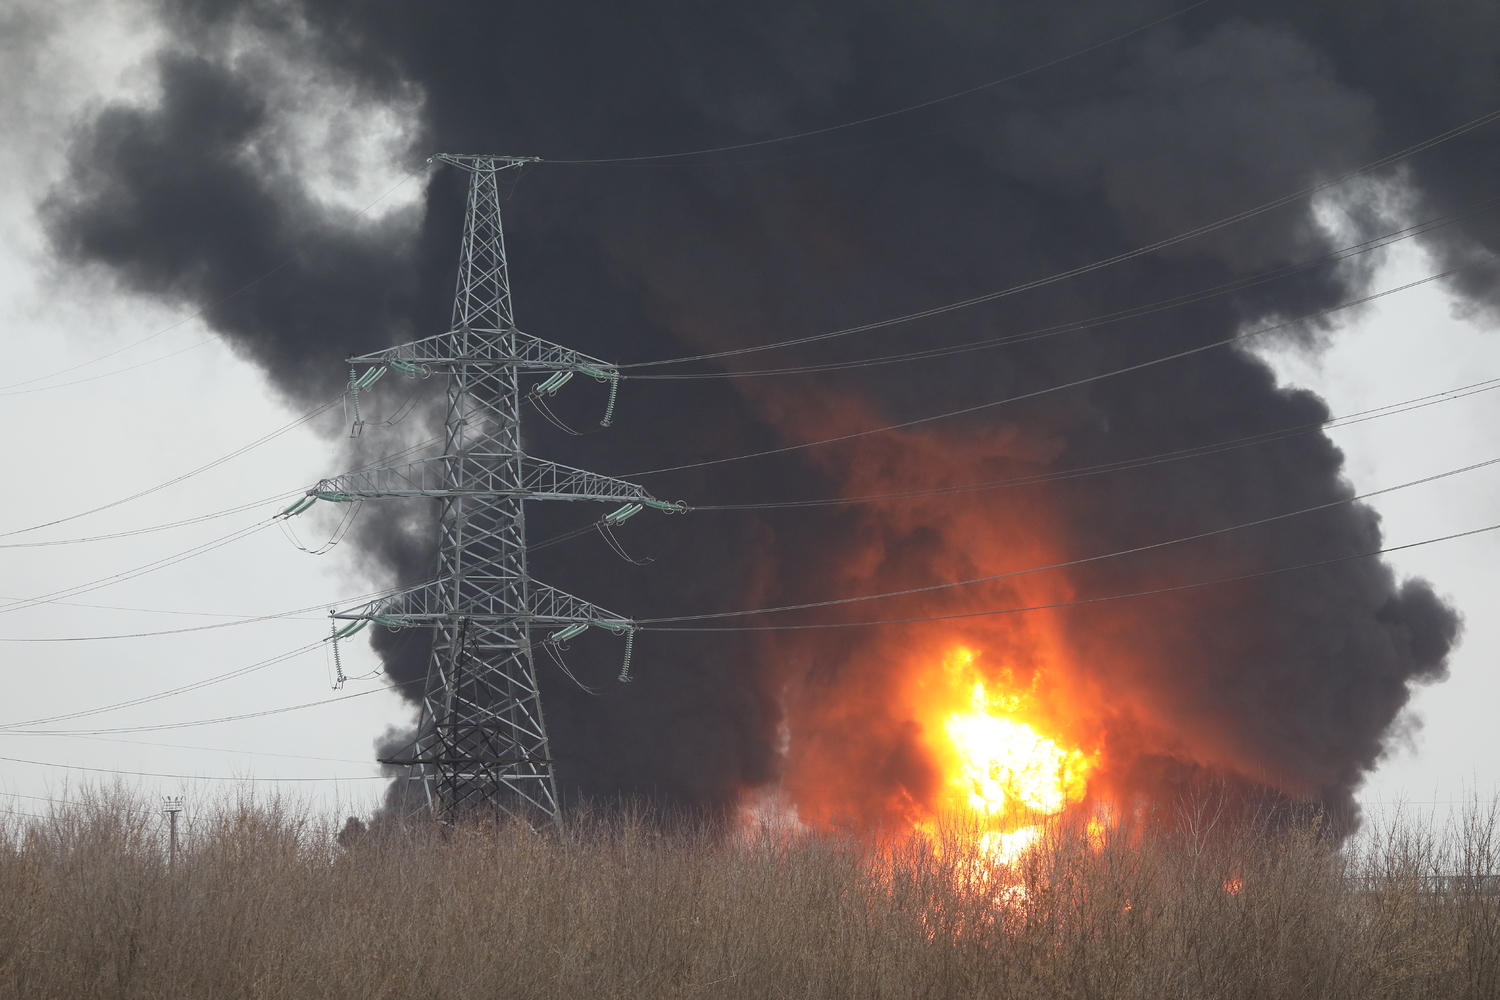 Сколько будут бомбить белгород. Атака на нефтебазу в Белгороде. Пожар на нефтебазе в Белгороде. Пожар нефтебазы в Белгороде 2022. Горит Нефтебаза в Белгороде.